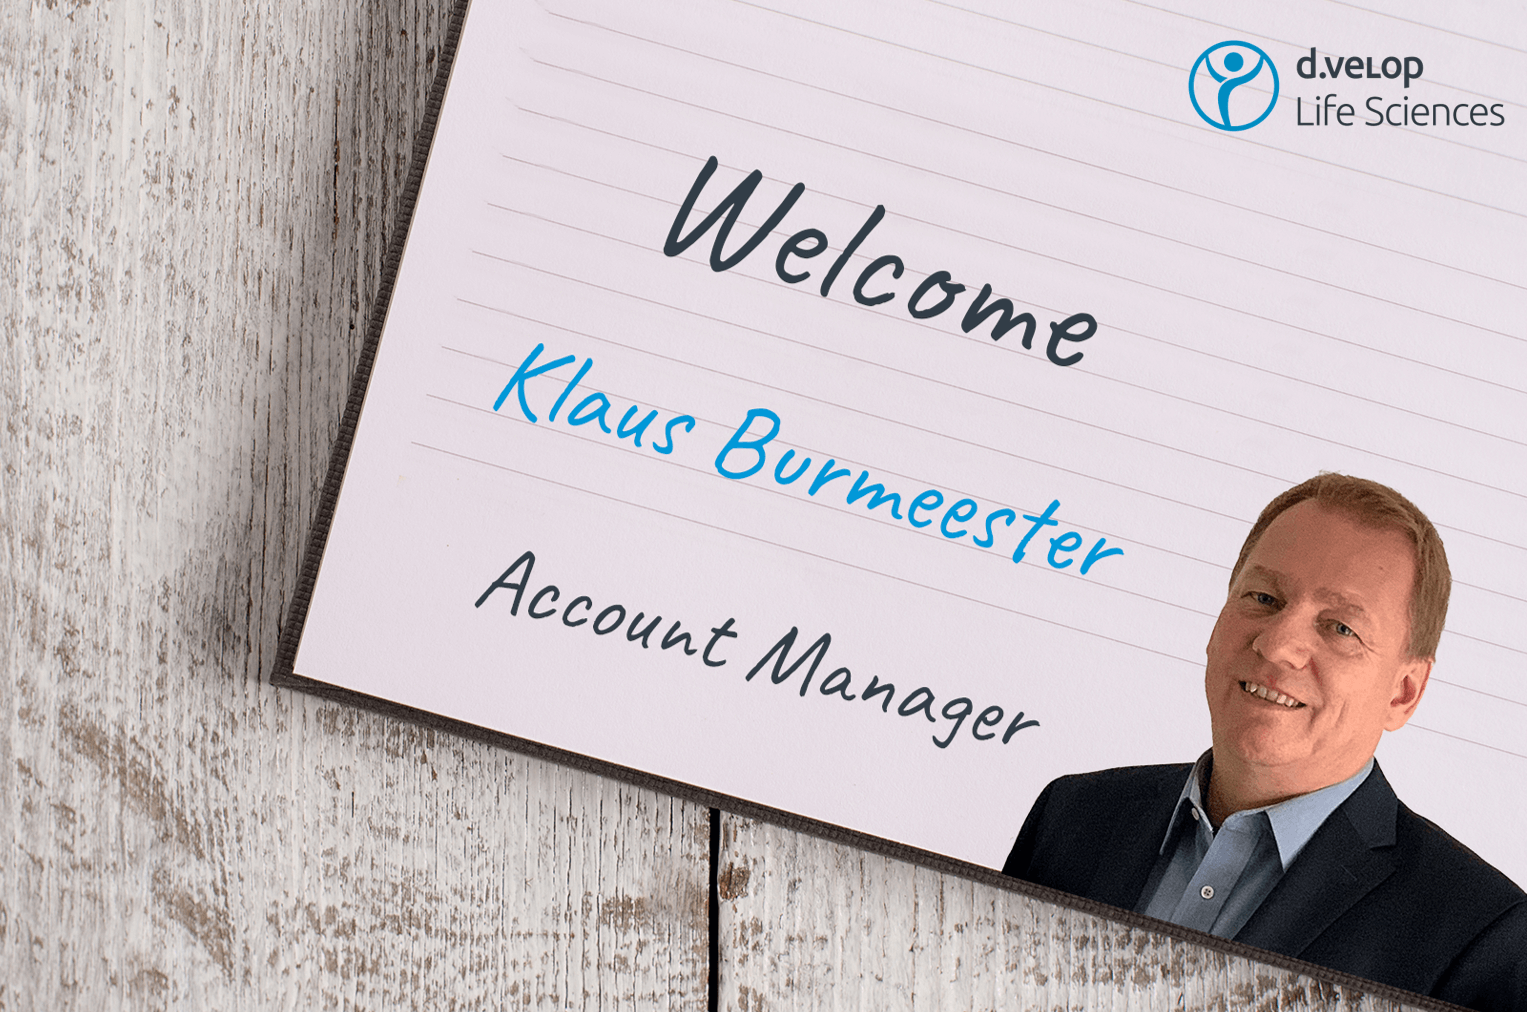 New sales representative of Digital Life Sciences - Klaus Burmeester